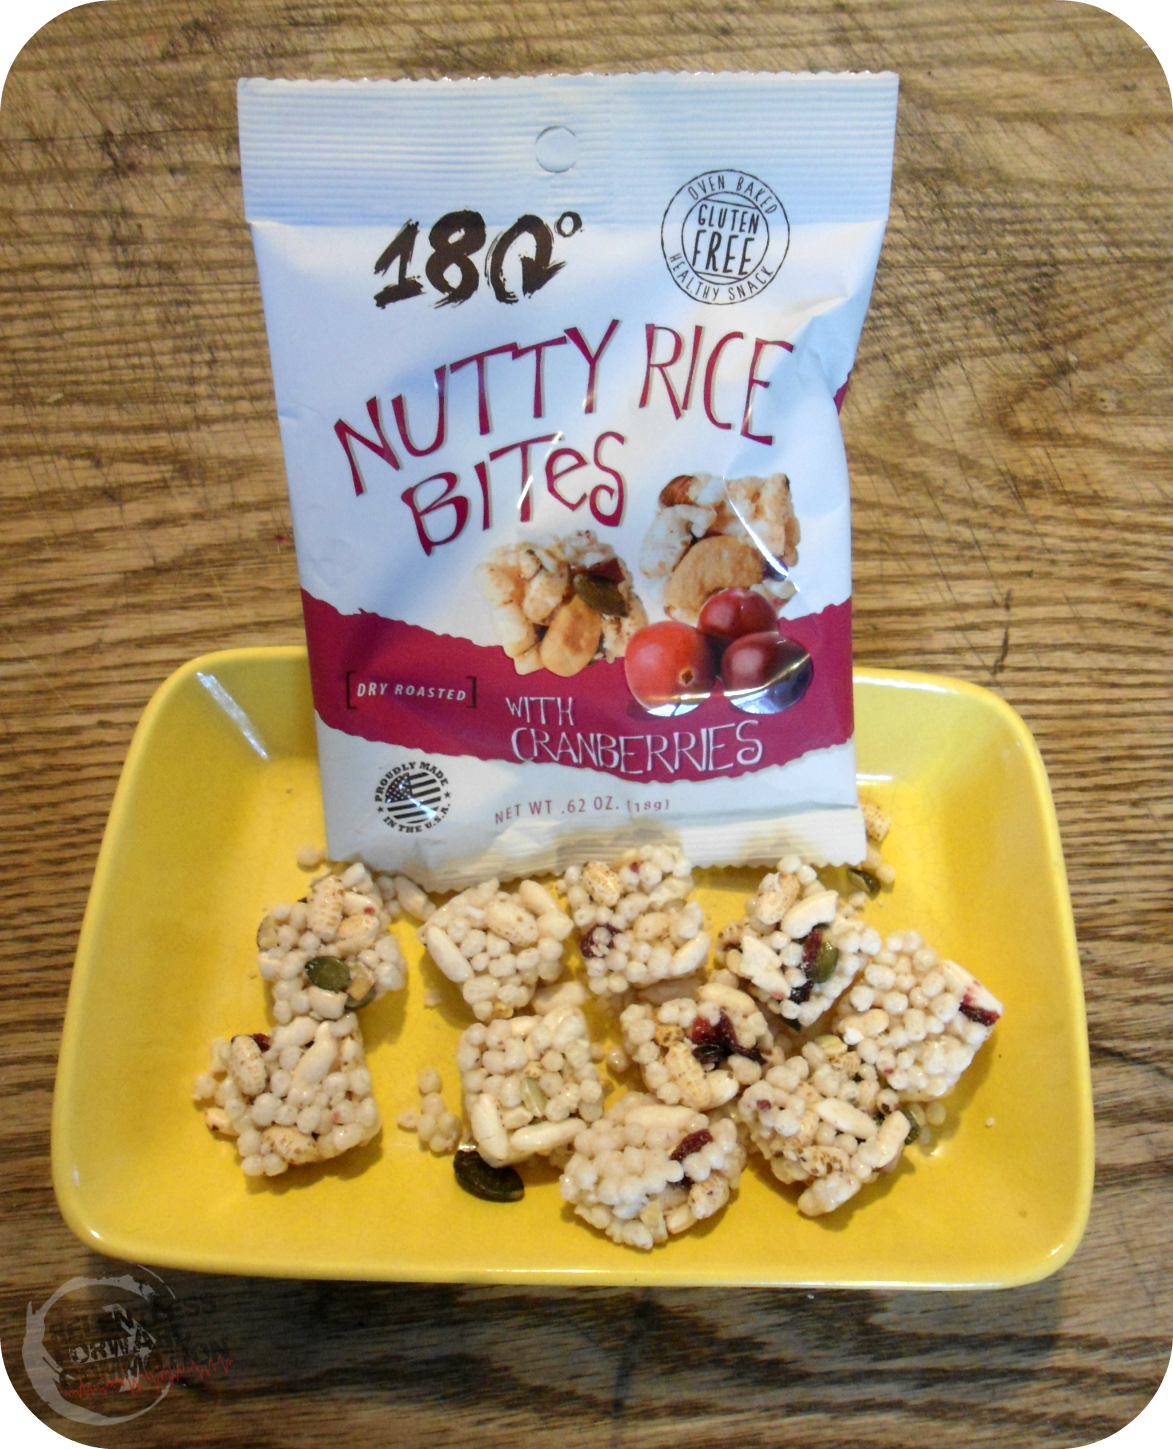 Nutty Rice Bites